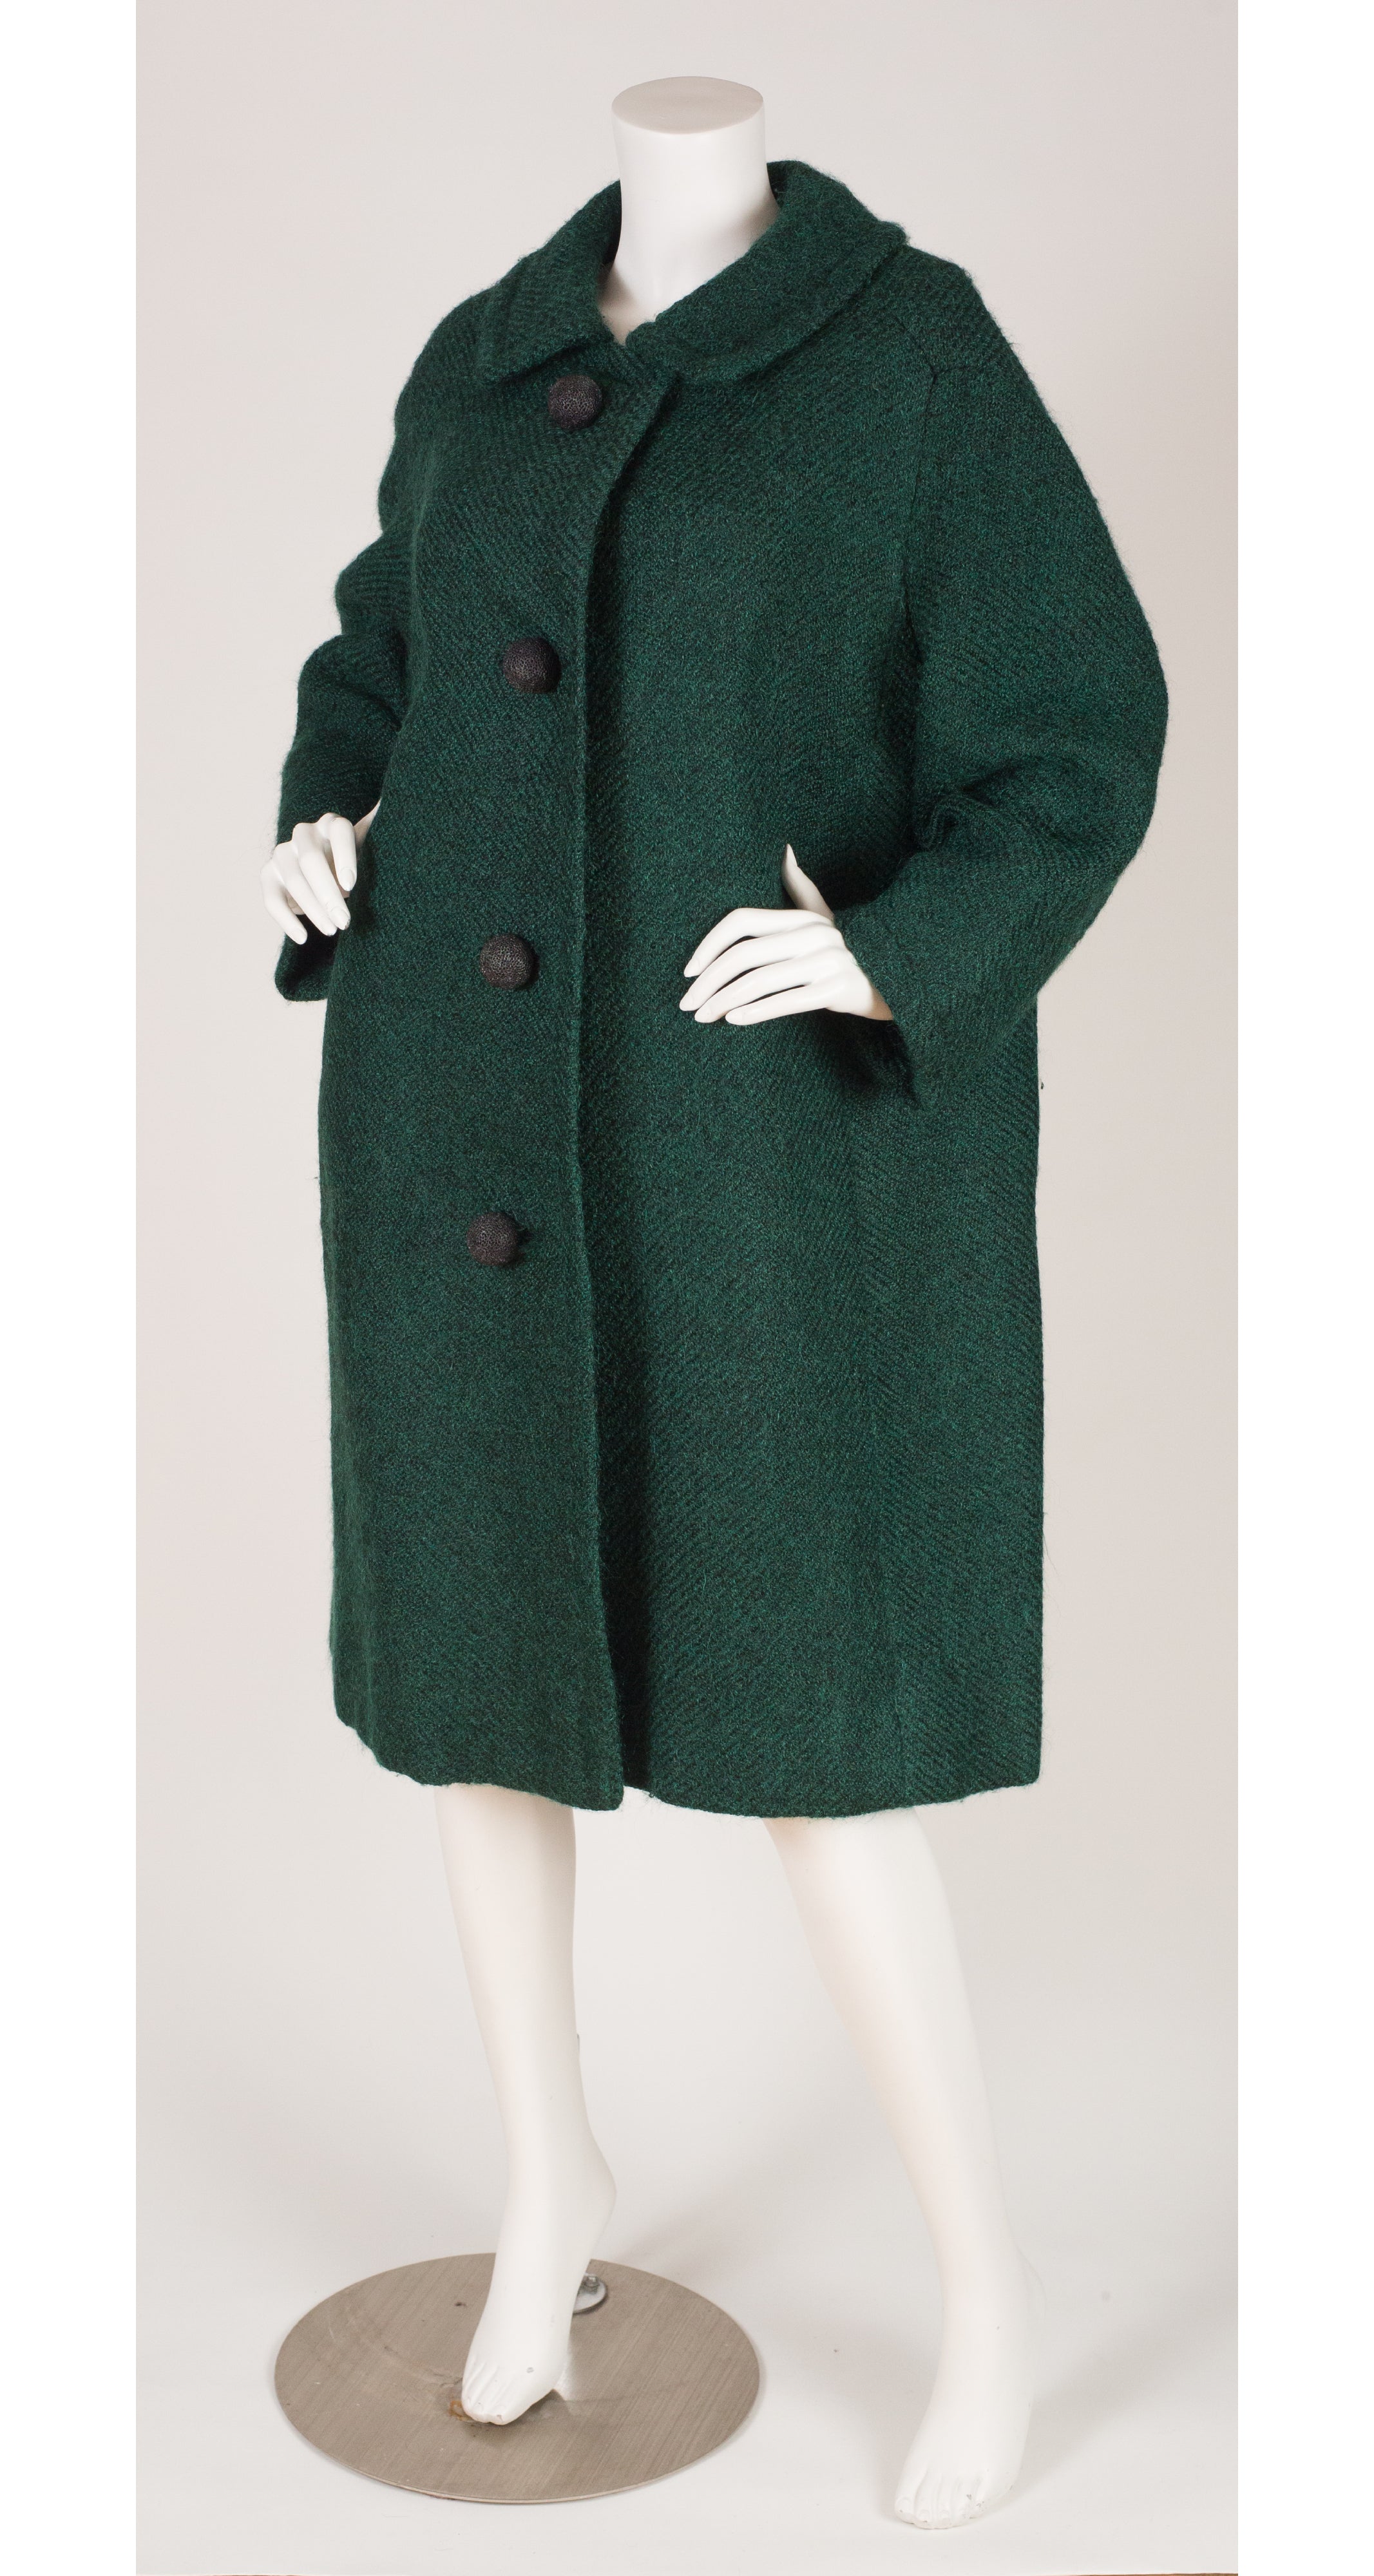 1950s Green Wool Collared Coat